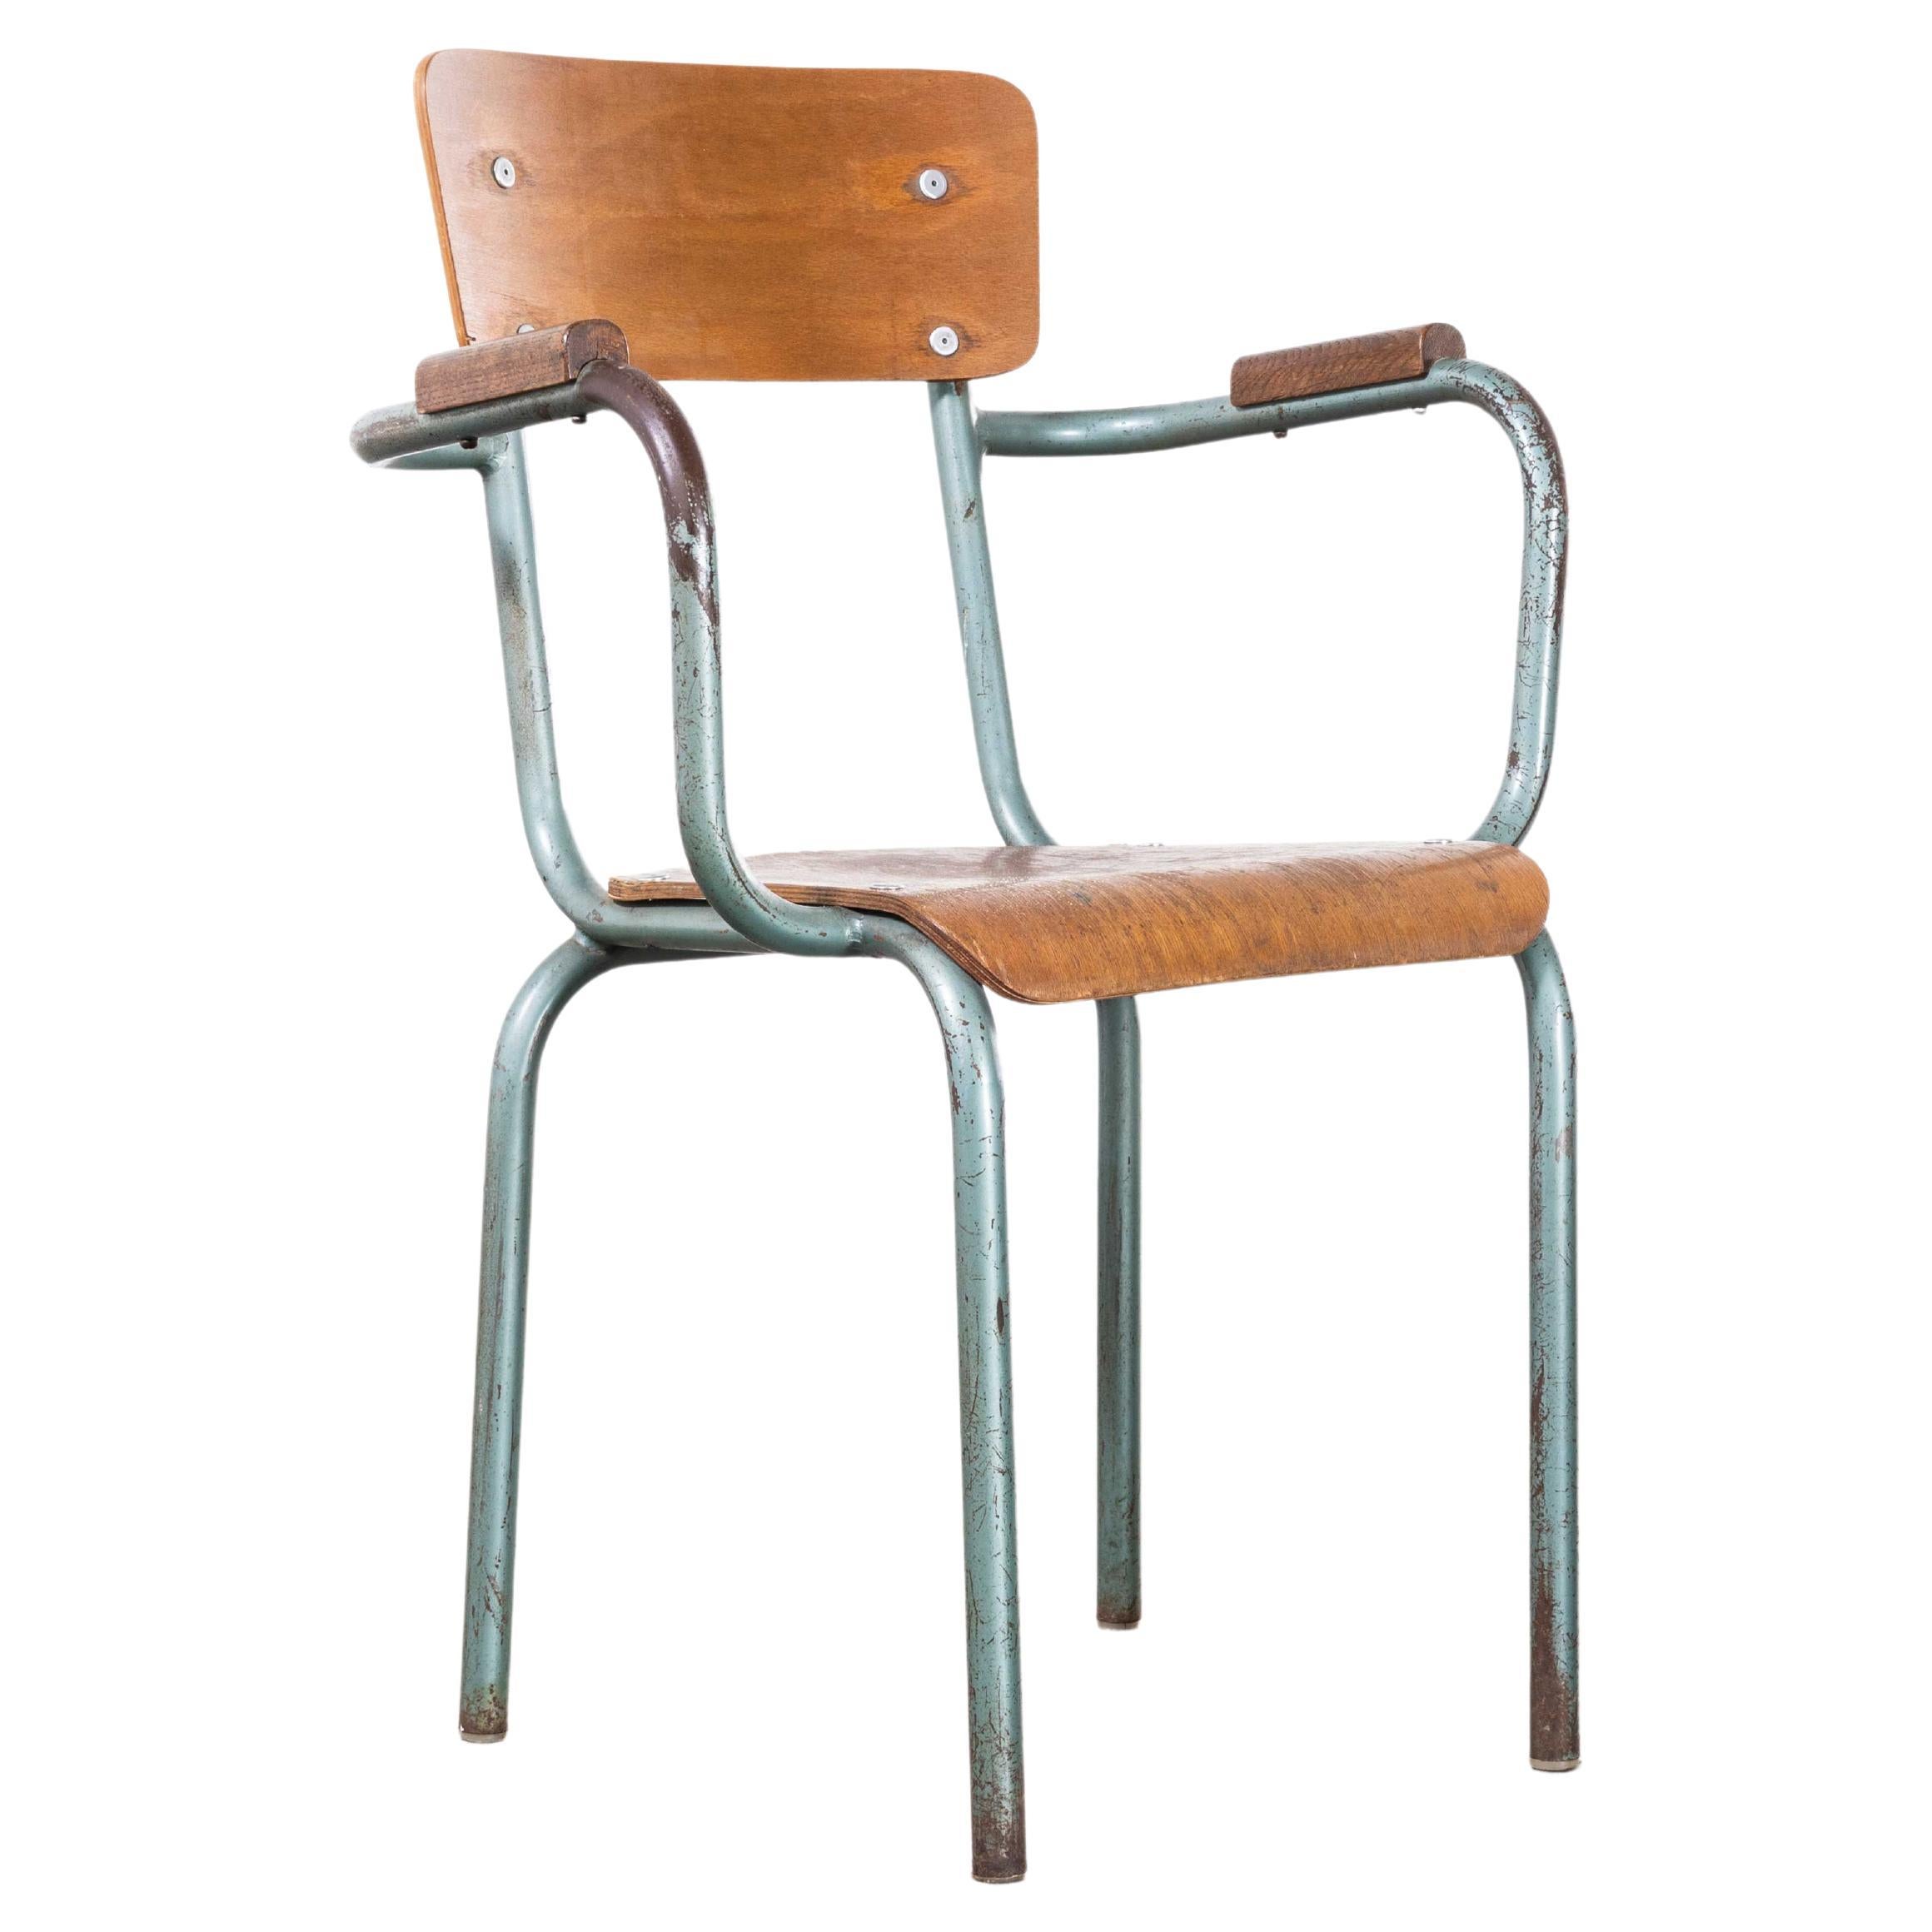 1950s Original French Mullca Armchair, Desk Chair